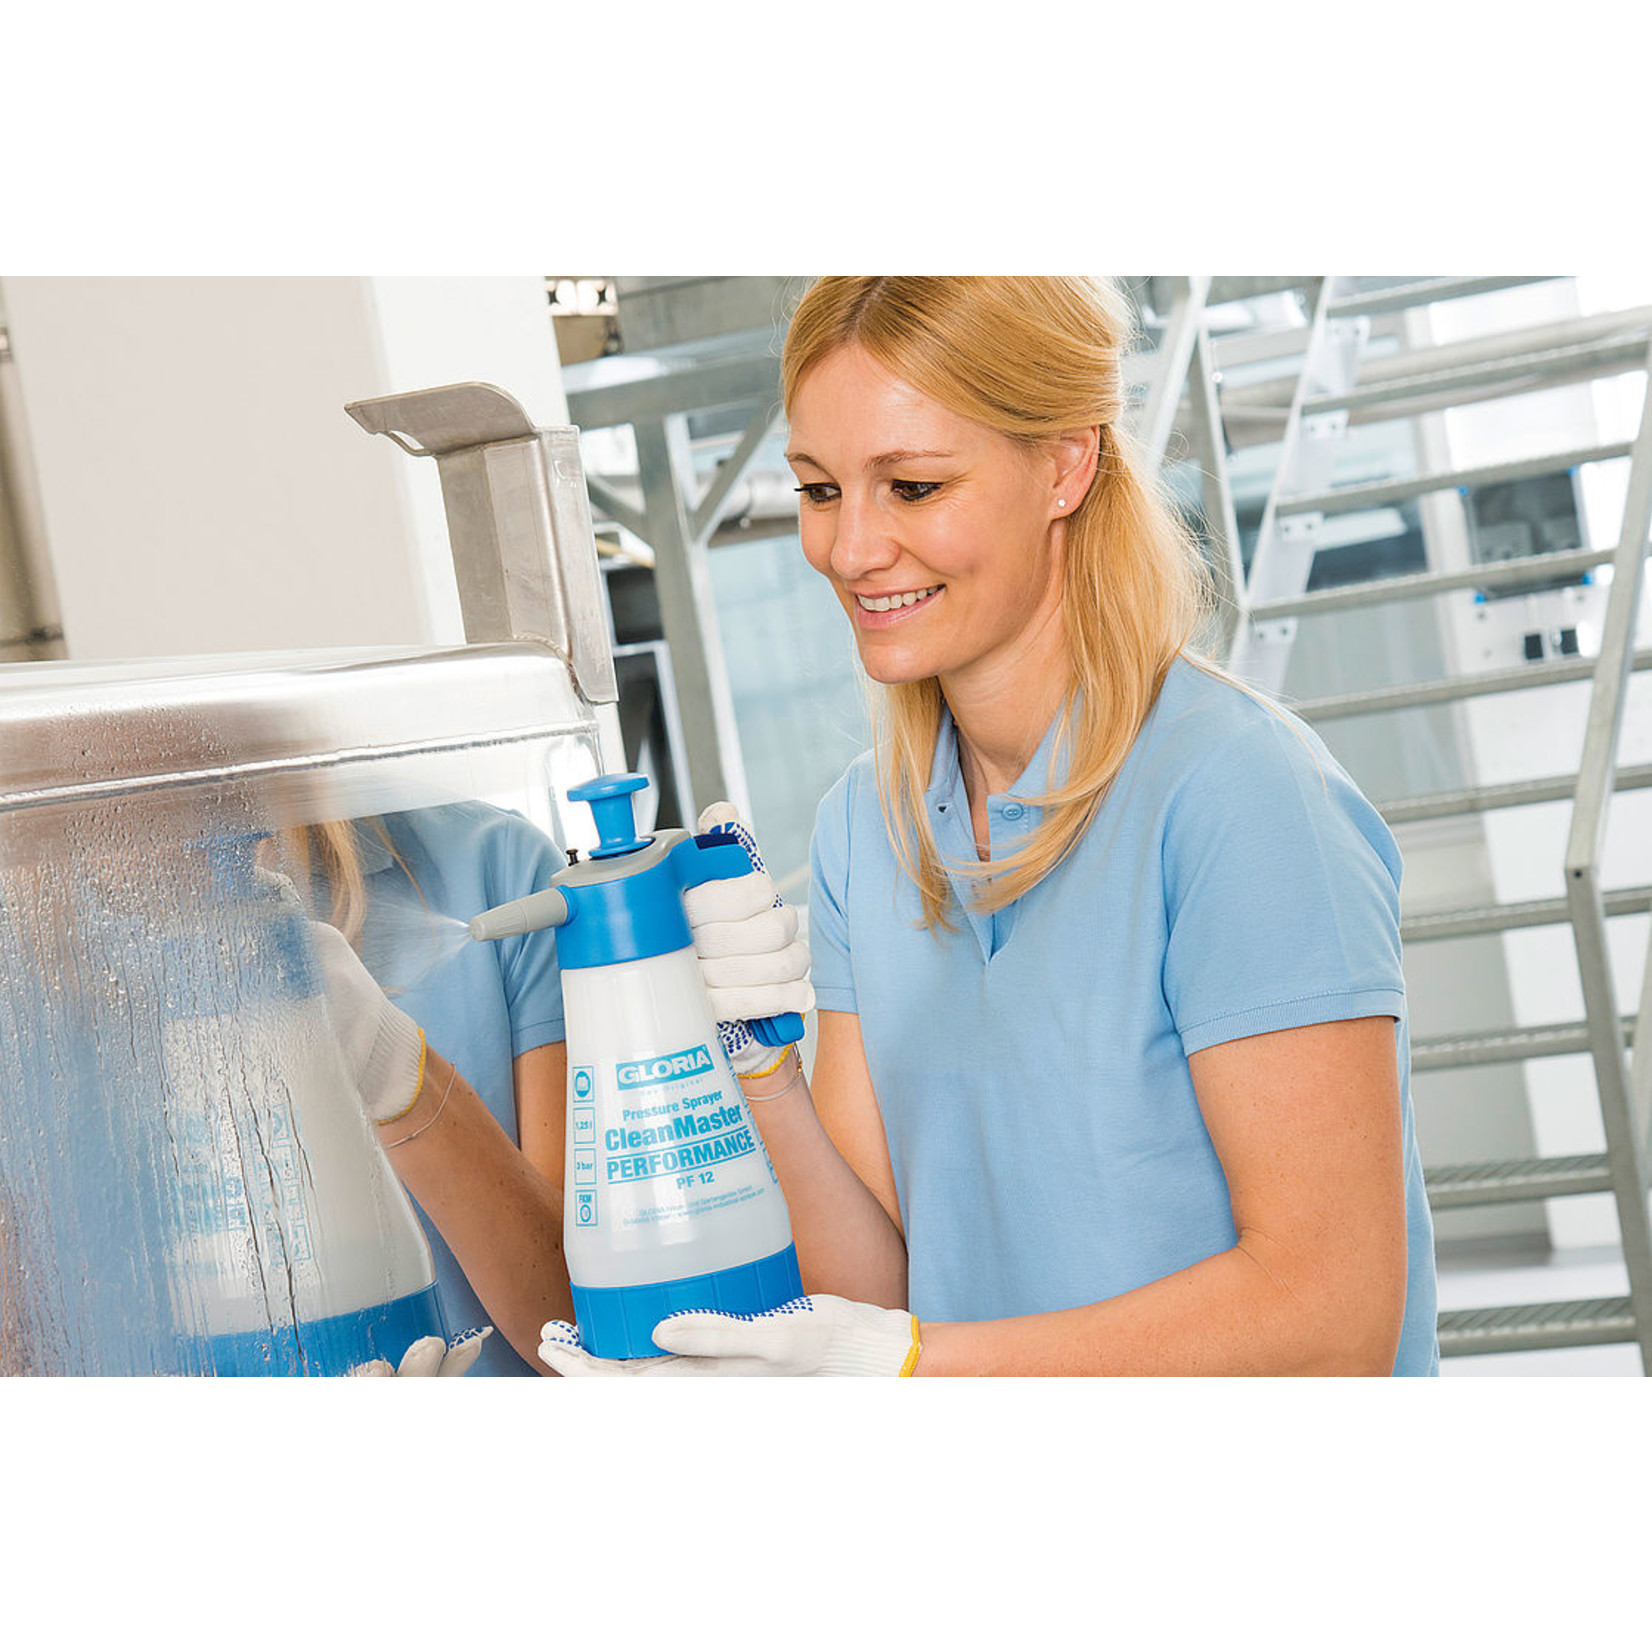 Gloria Reiniging Drukspuit CleanMaster PERFORMANCE PF 12  (1¼ liter)